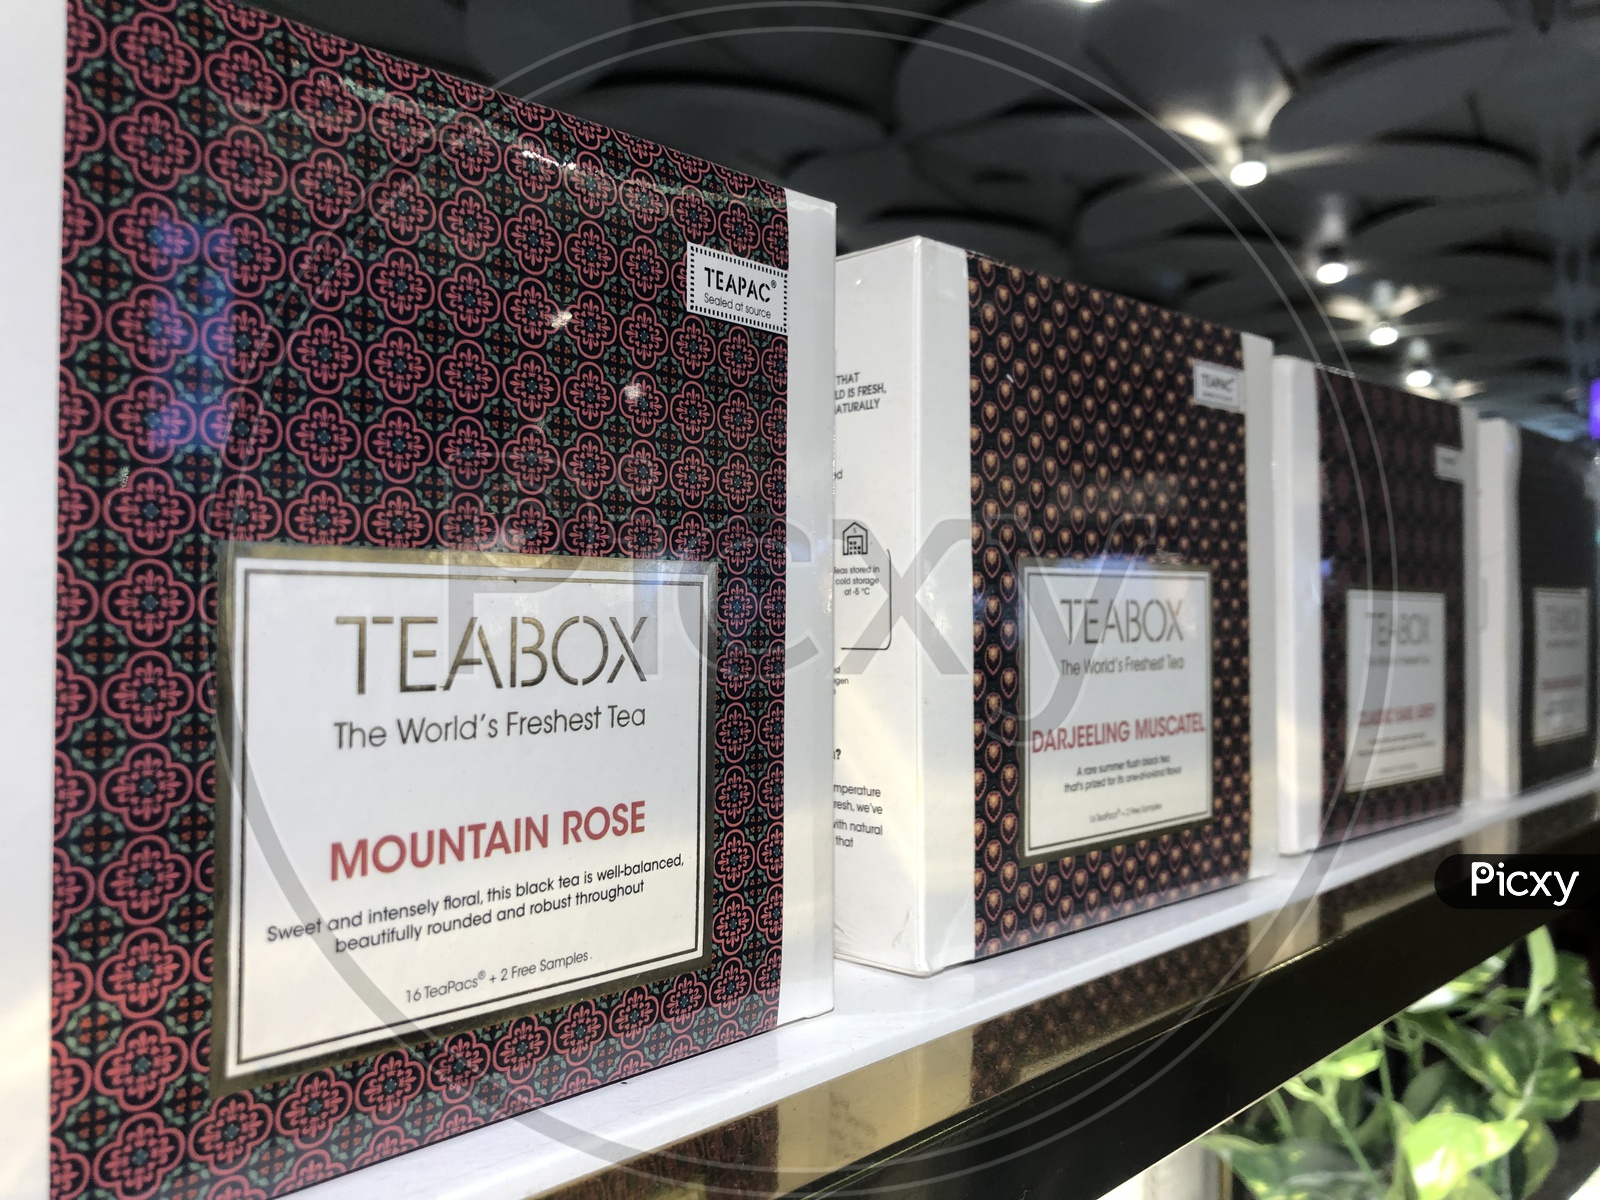 TEABOX A Tea Powder Vendor Stall With Tea Powder Boxes Closeup